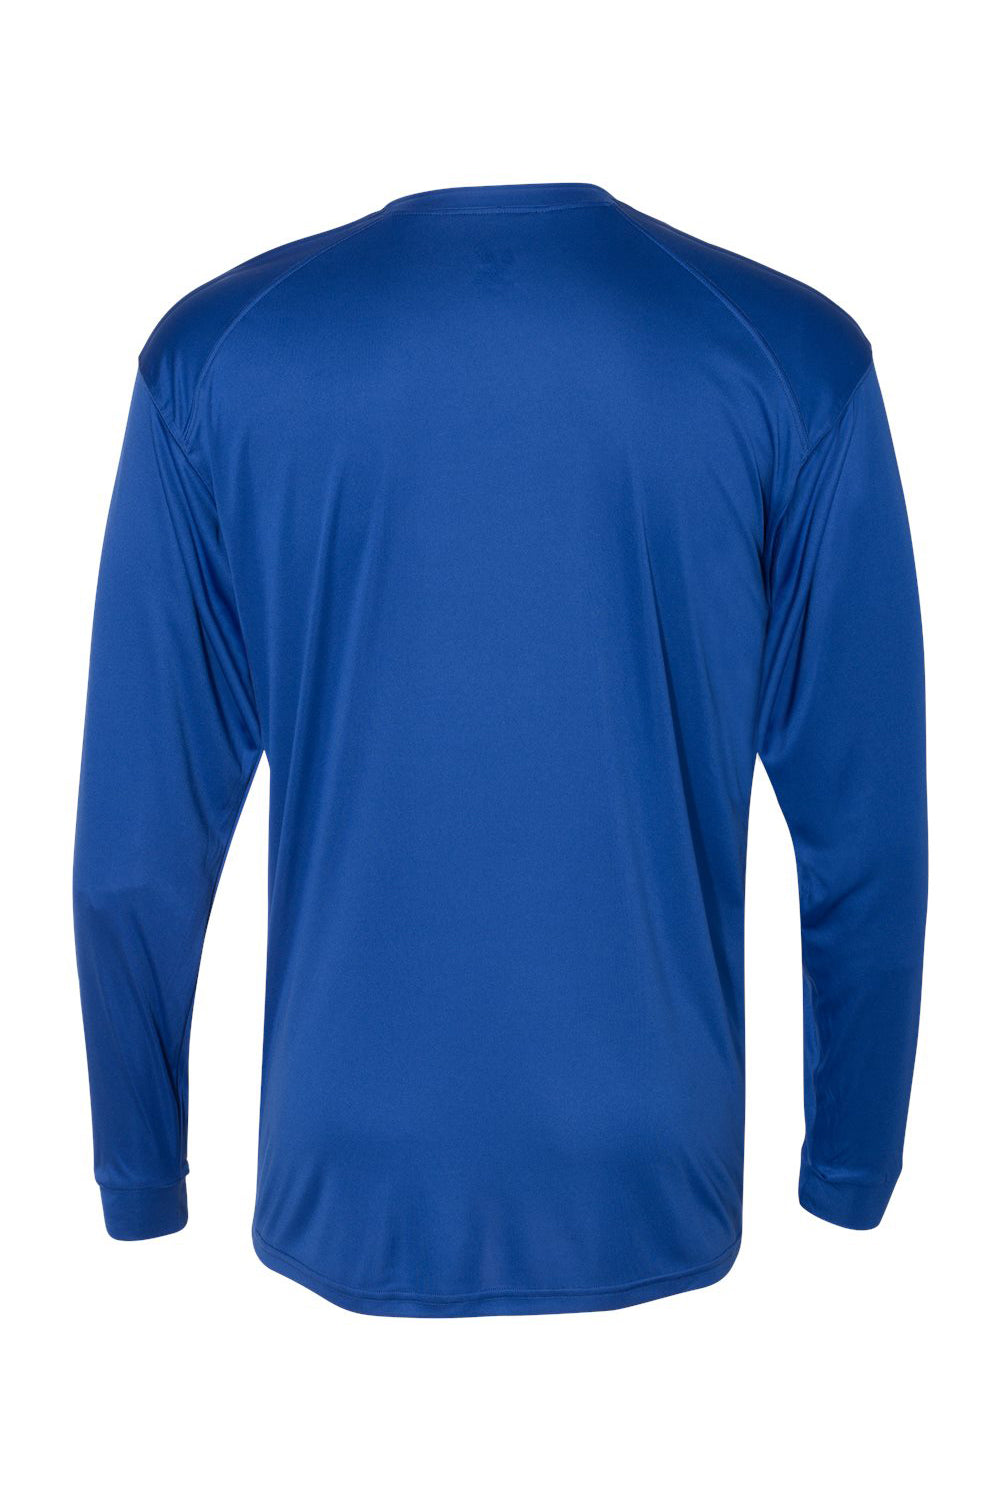 Badger 4004 Mens Ultimate SoftLock Moisture Wicking Long Sleeve Crewneck T-Shirt Royal Blue Flat Back